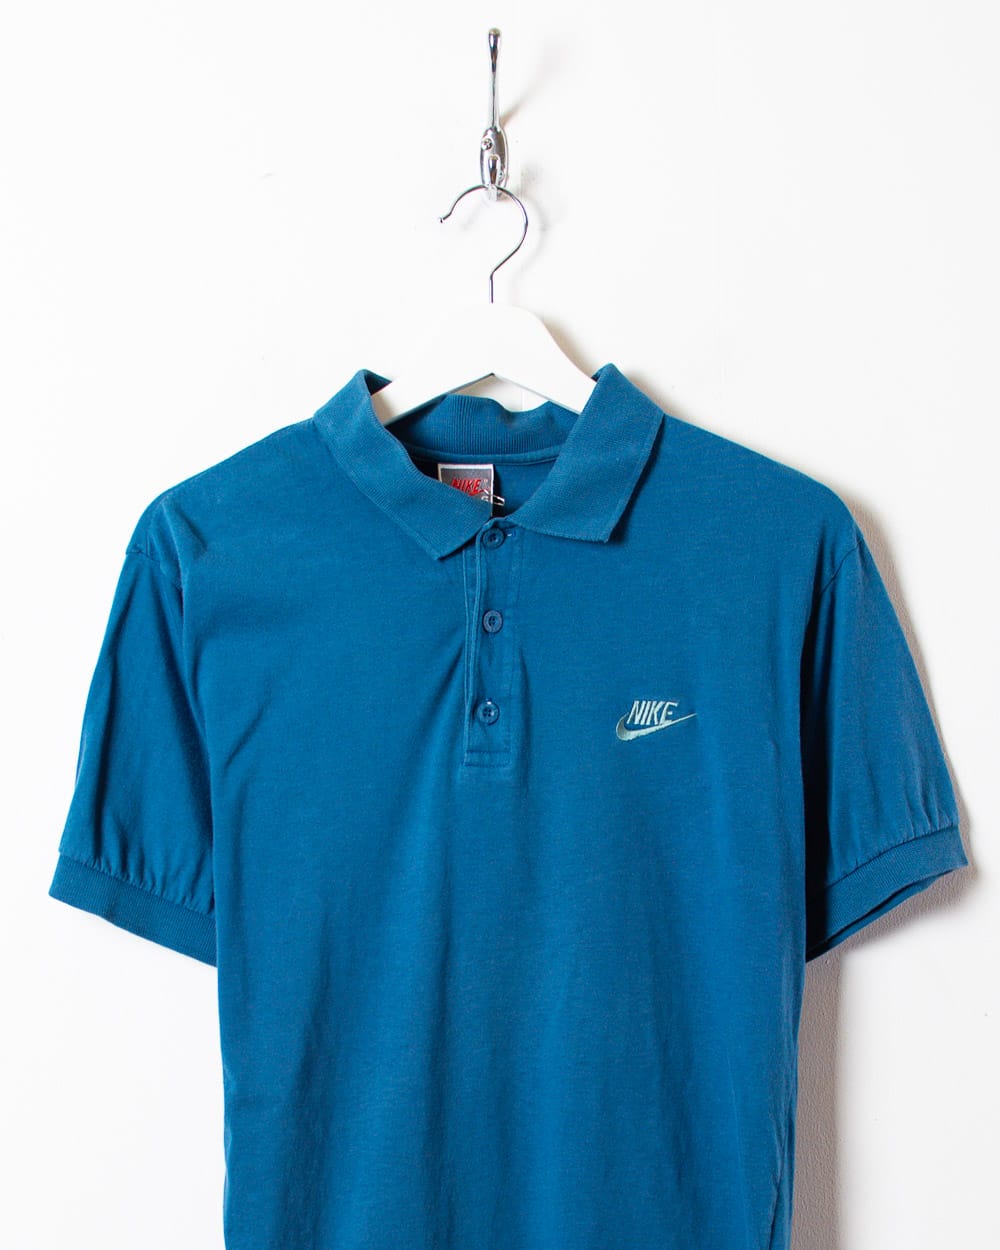 Navy Nike Polo Shirt - Small